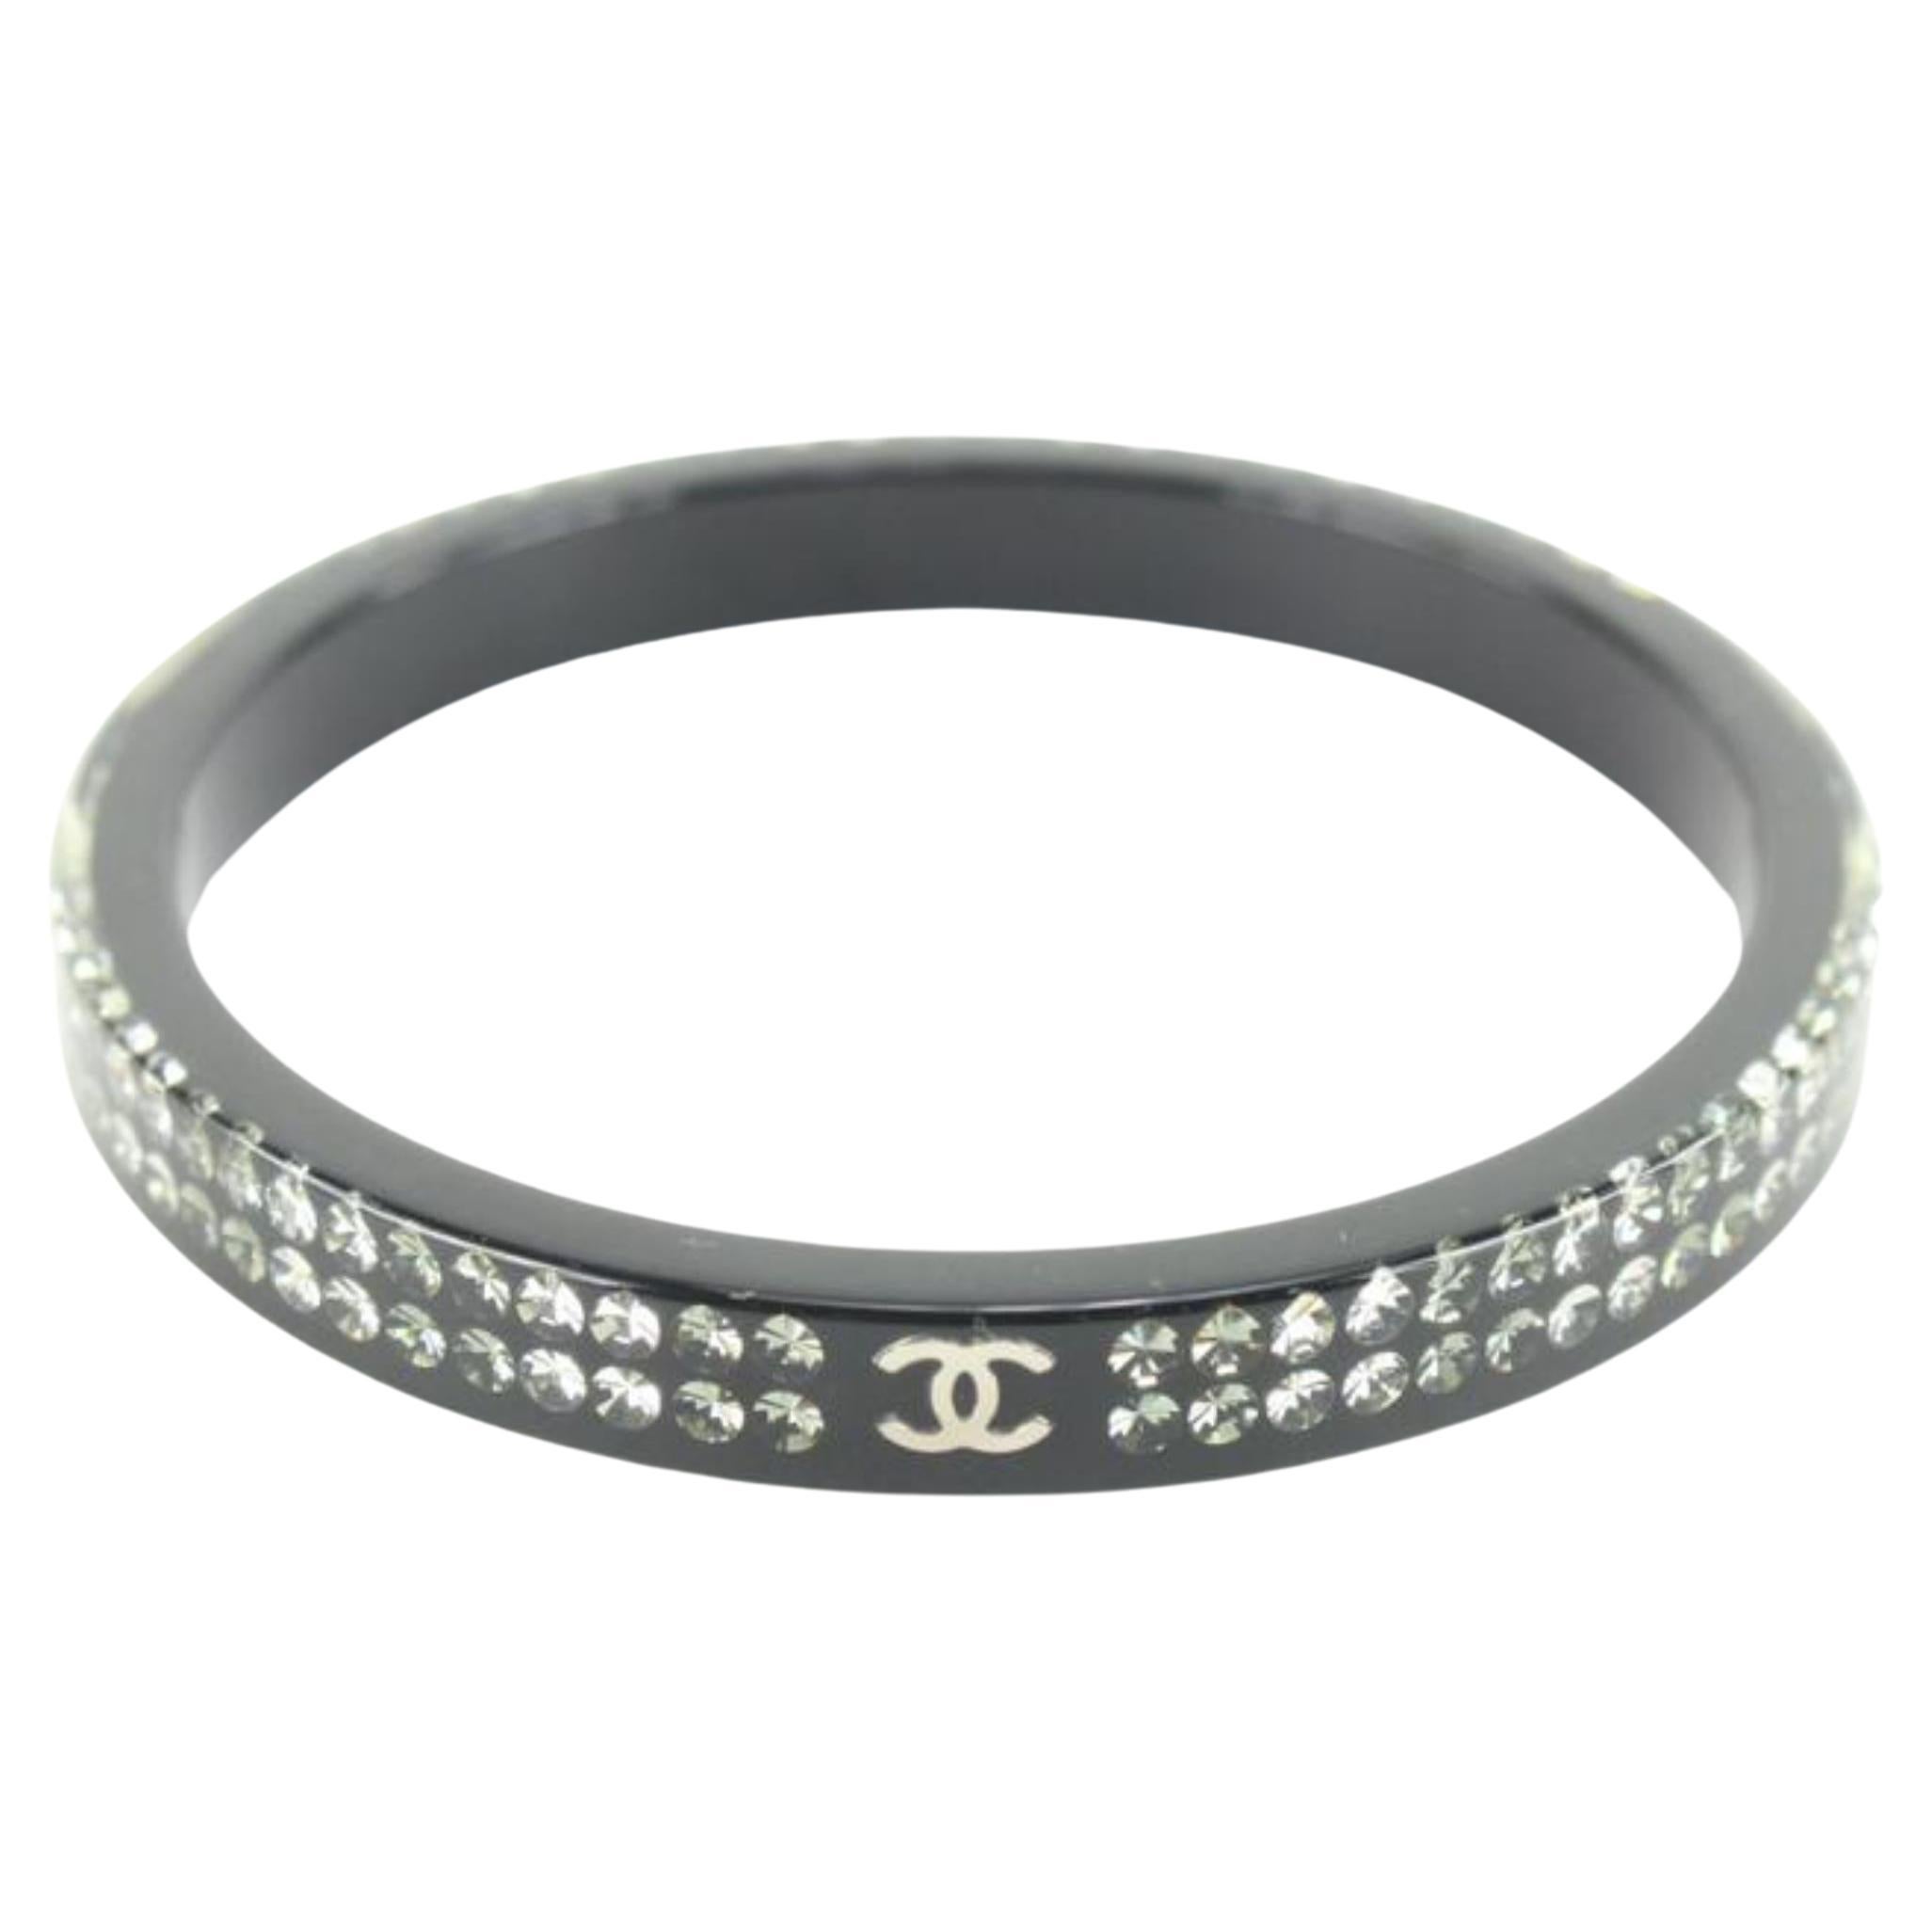 Chanel 2011 Black Crystal CC Logo Bangle Bracelet 26ck824s